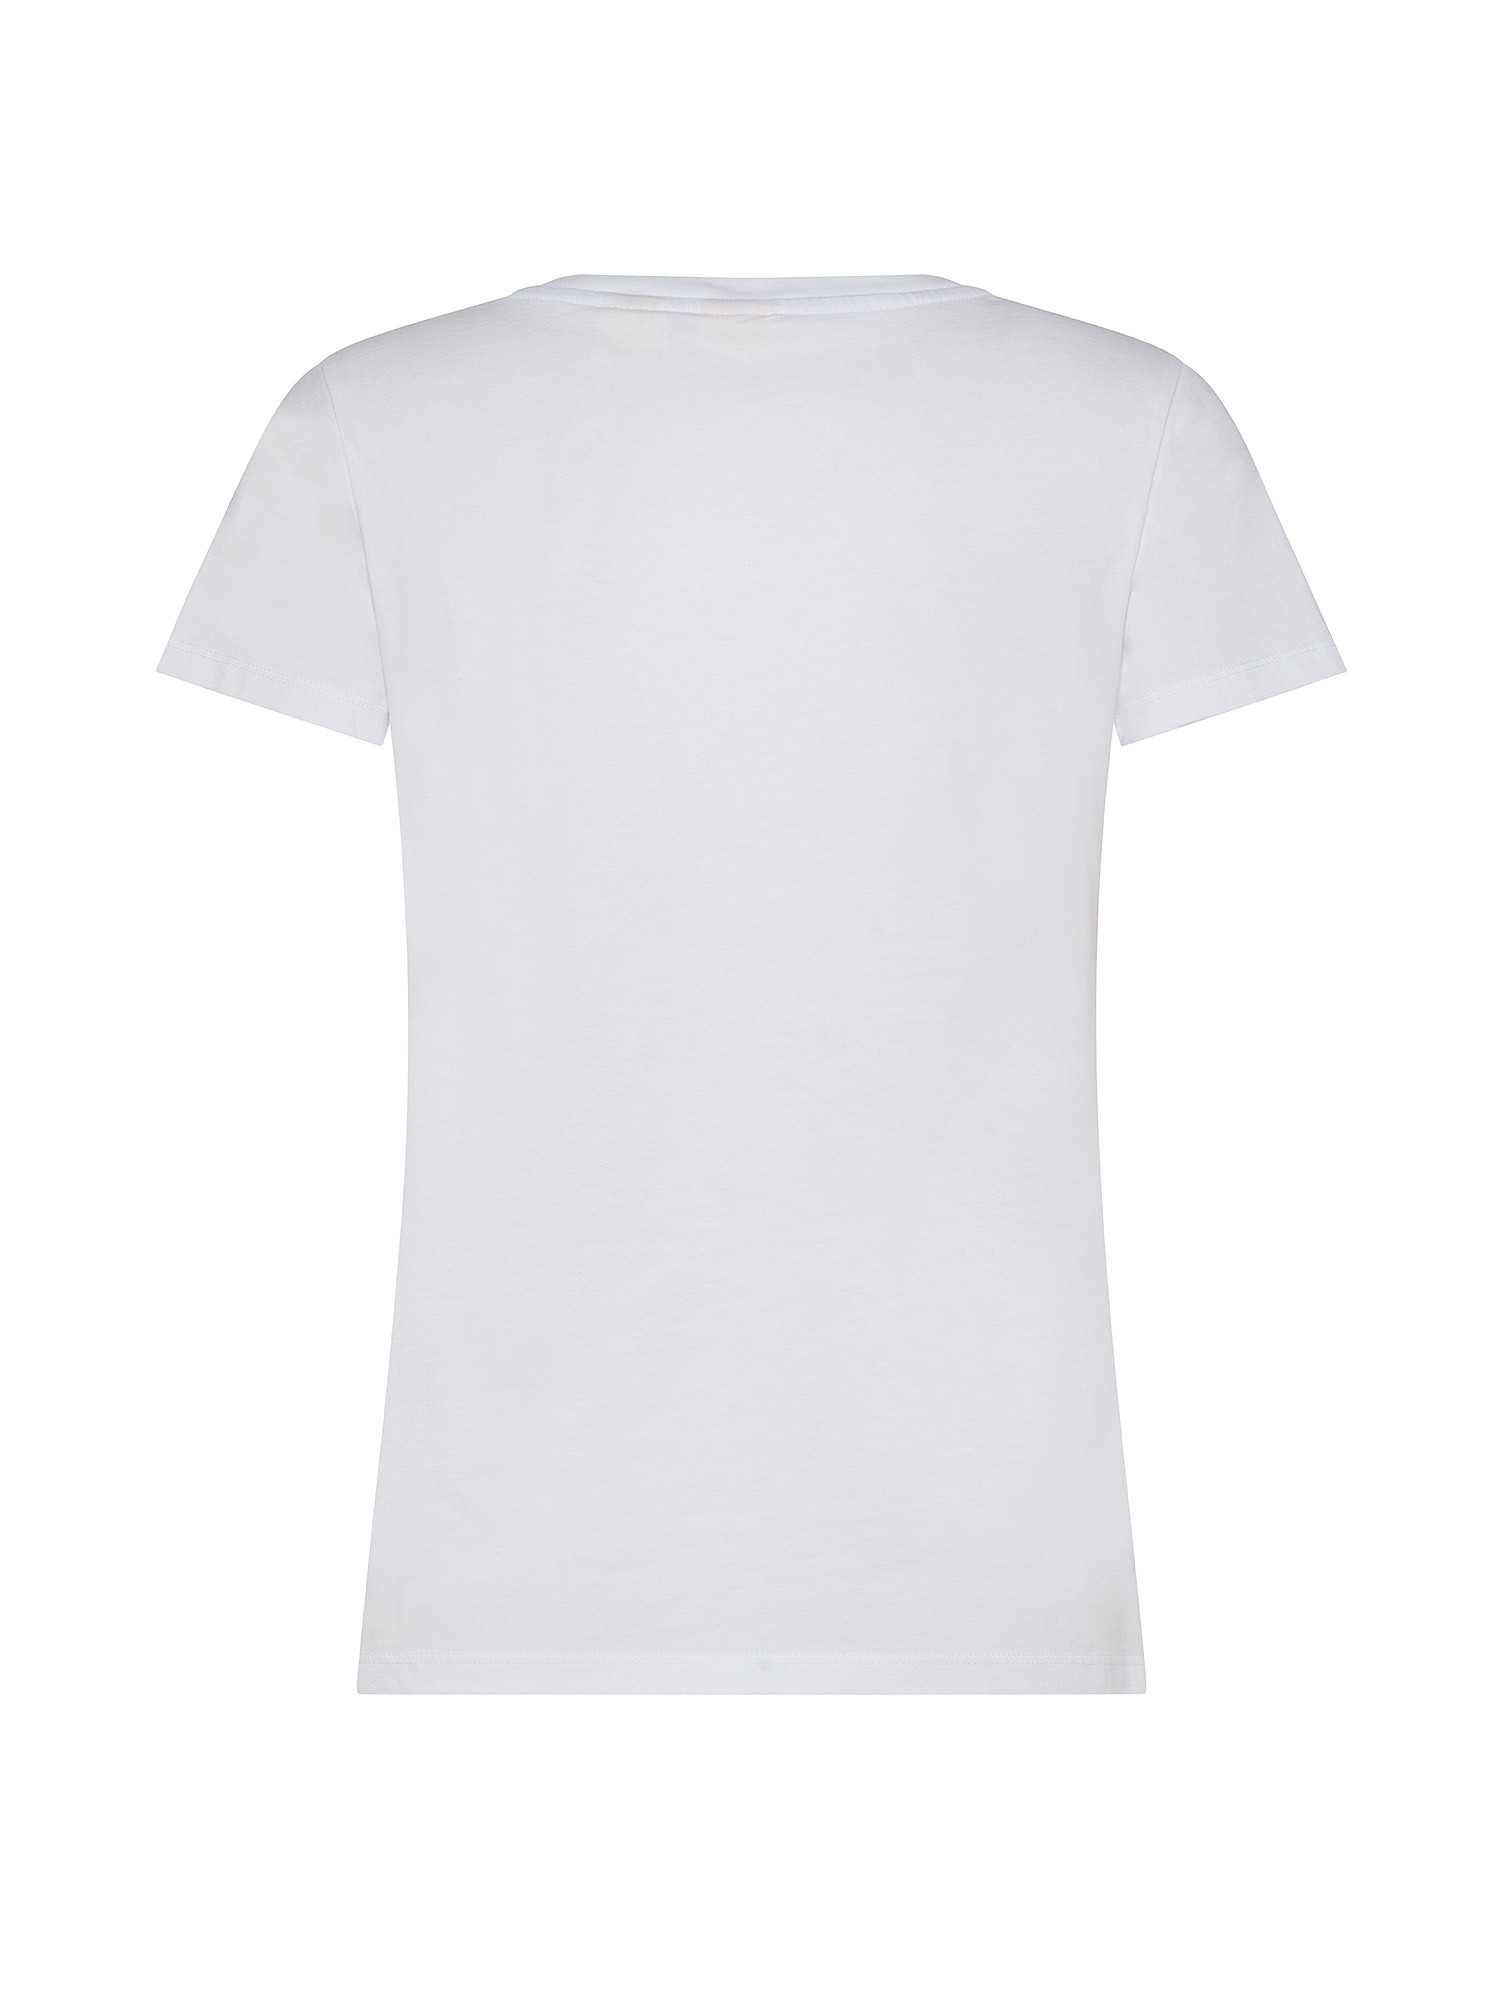 Levi's - T-shirt con logo e scollo a v, Bianco, large image number 1